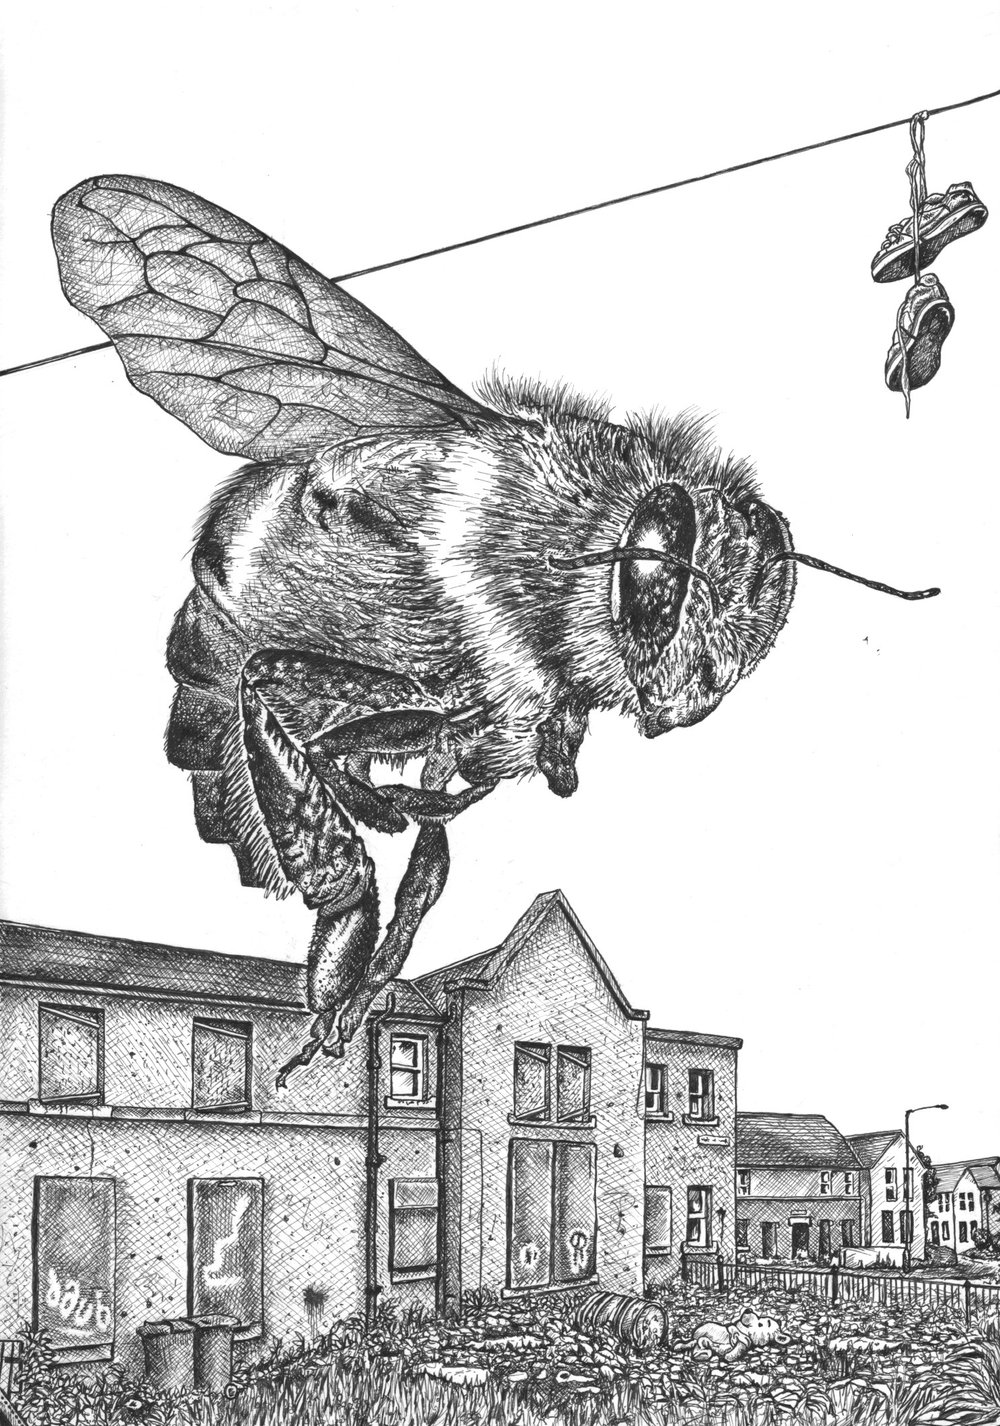 'coV bee'